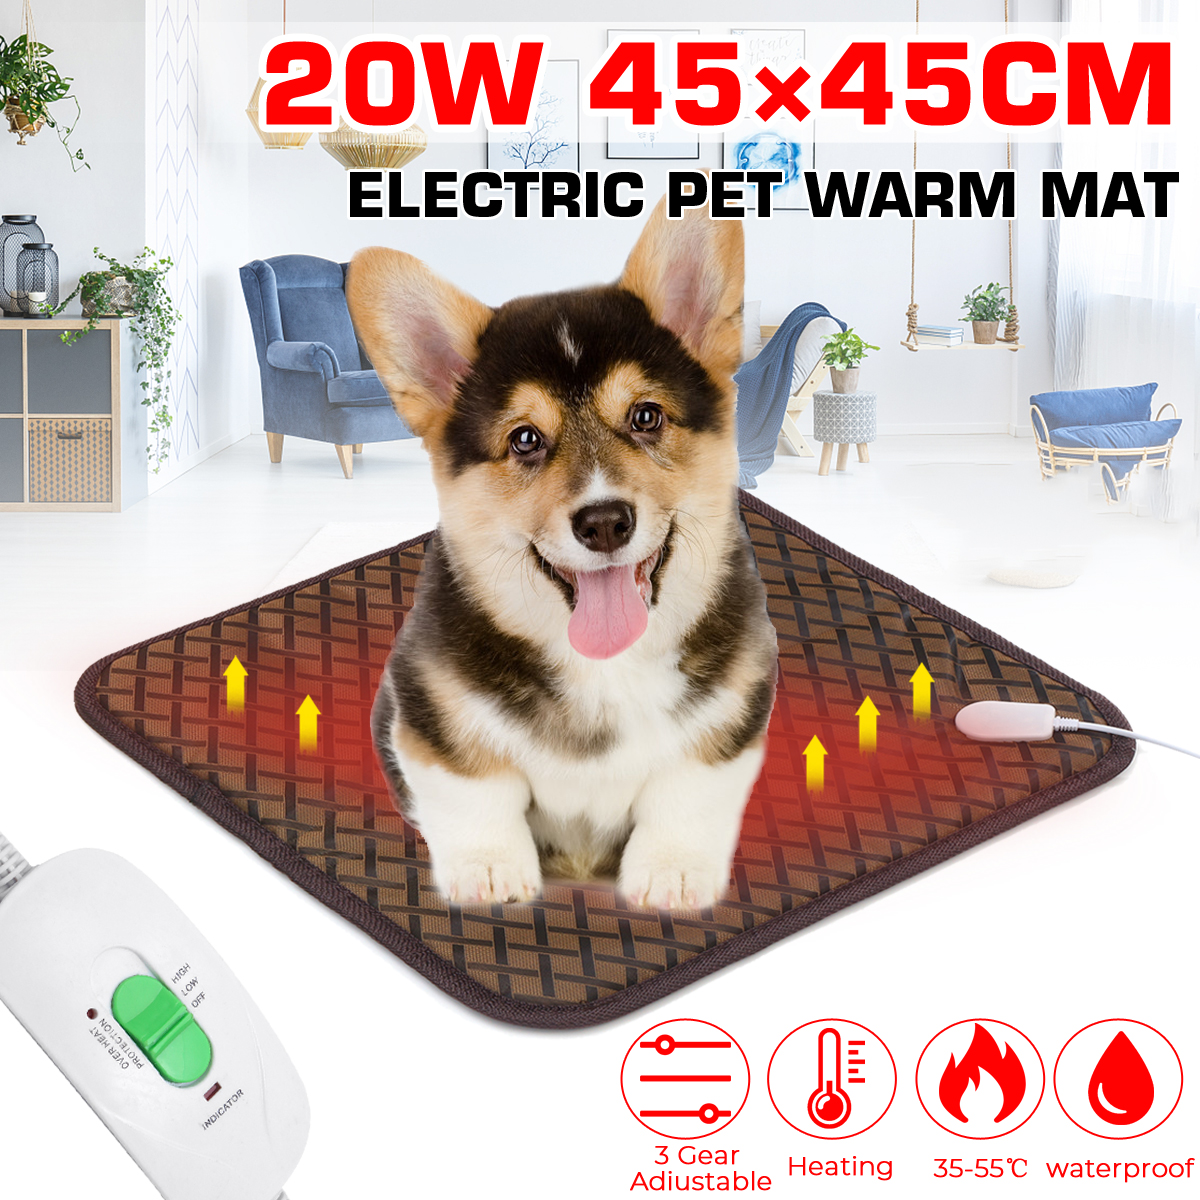 Waterproof-Pet-Cat-Electric-Heat-Heated-Heating-Heater-Pad-Mat-Blanket-35-50degC-1626080-1